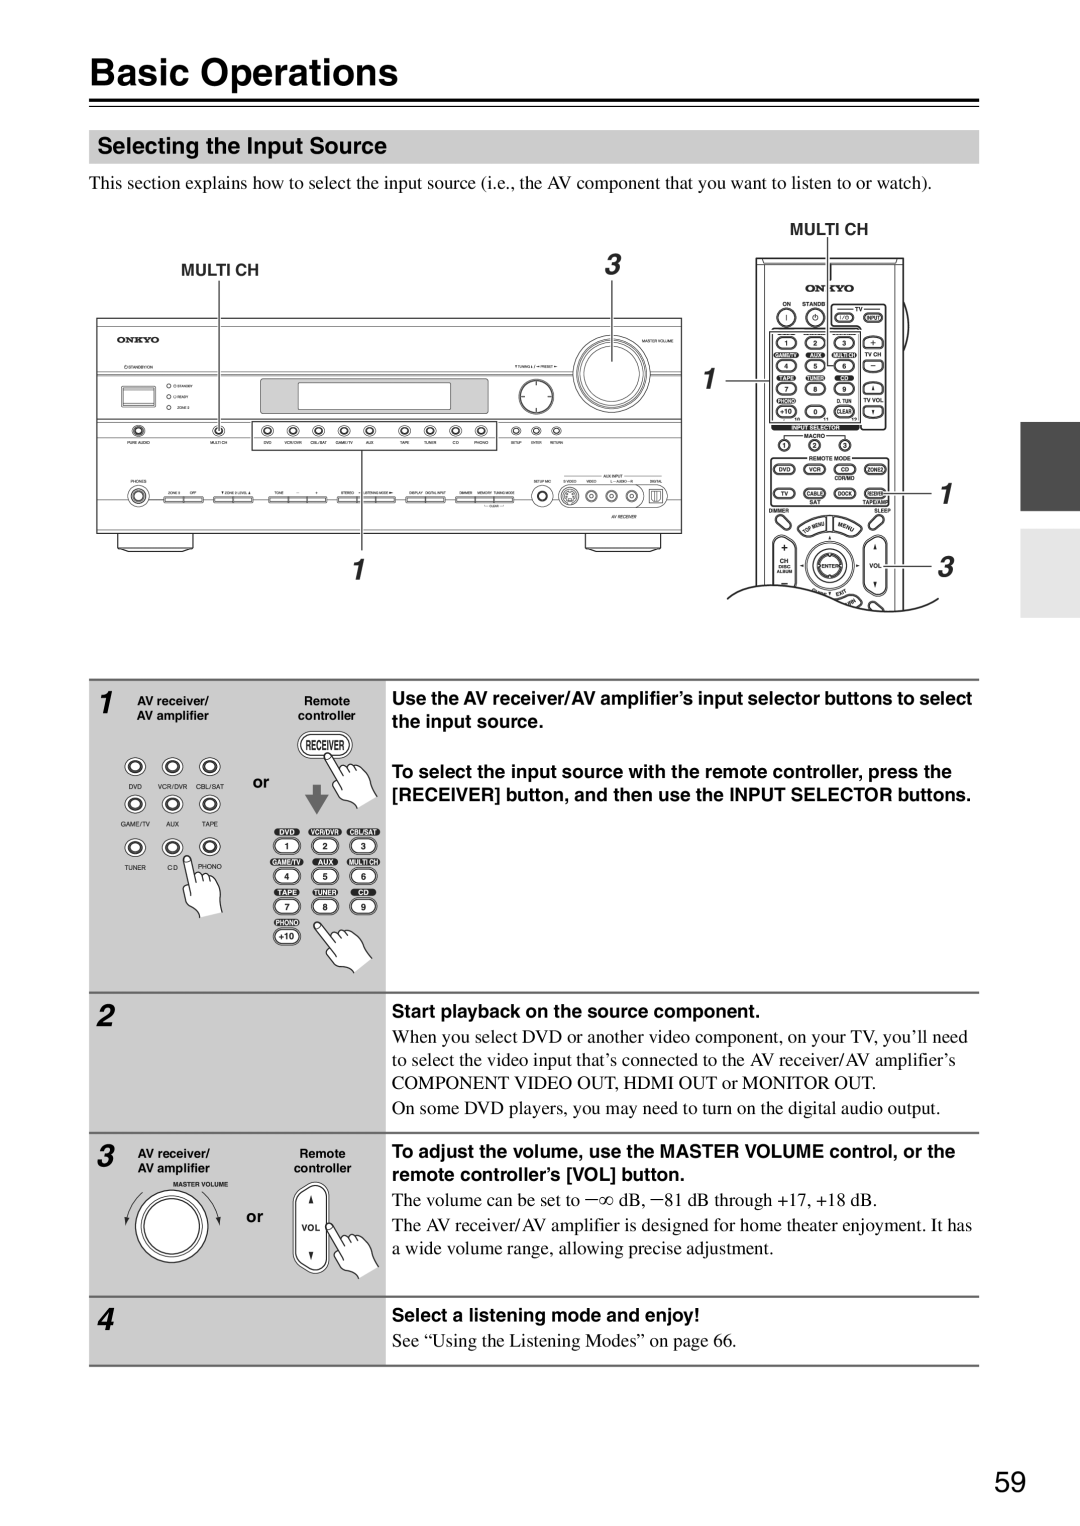 Onkyo TX-SA705 instruction manual Basic Operations, Selecting the Input Source 